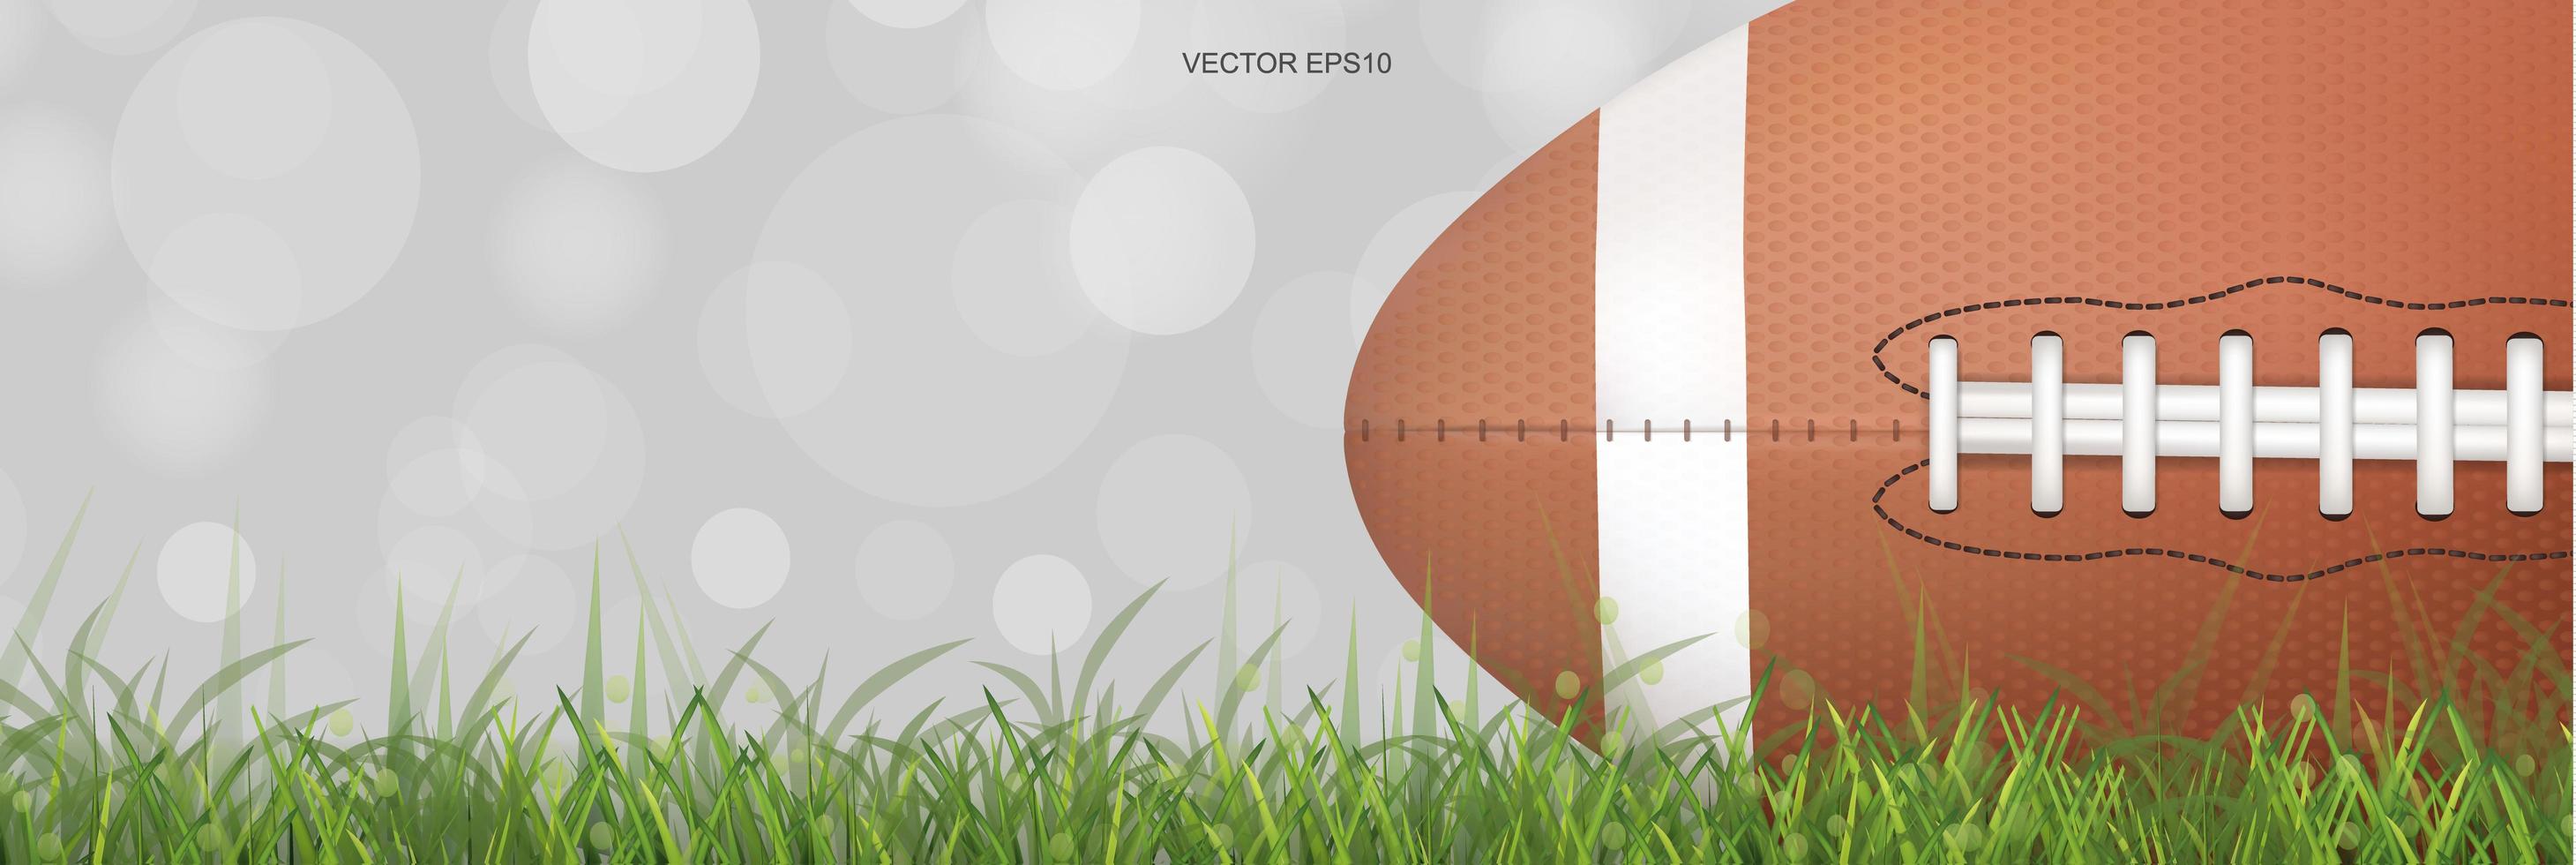 horizontale voetbal op groen grasveld vector